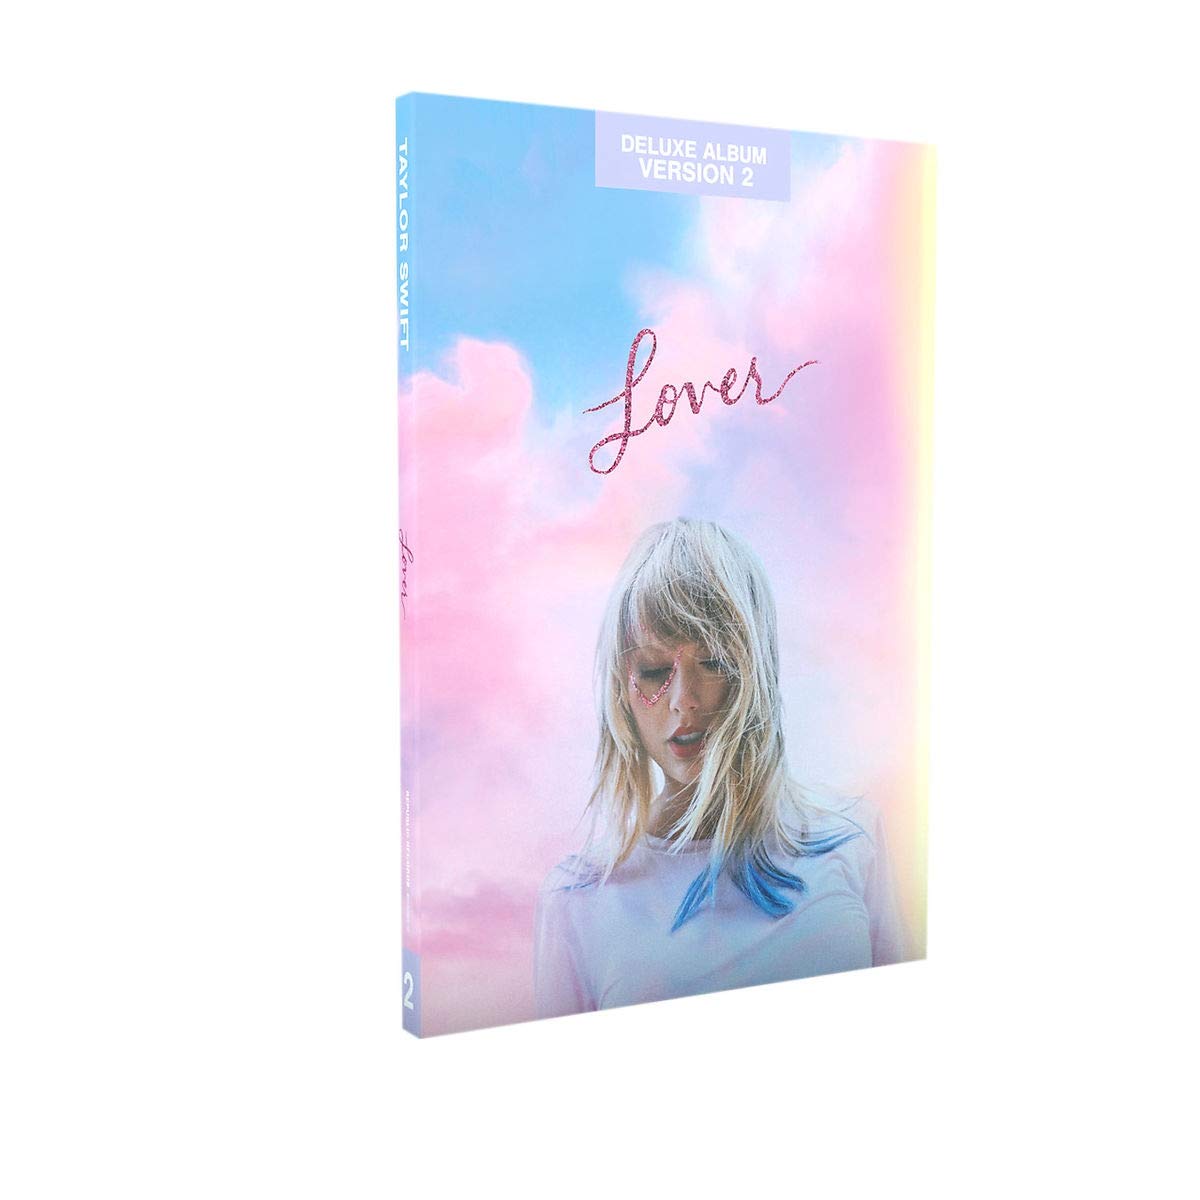 Lover Deluxe Album Version 2 | Taylor Swift